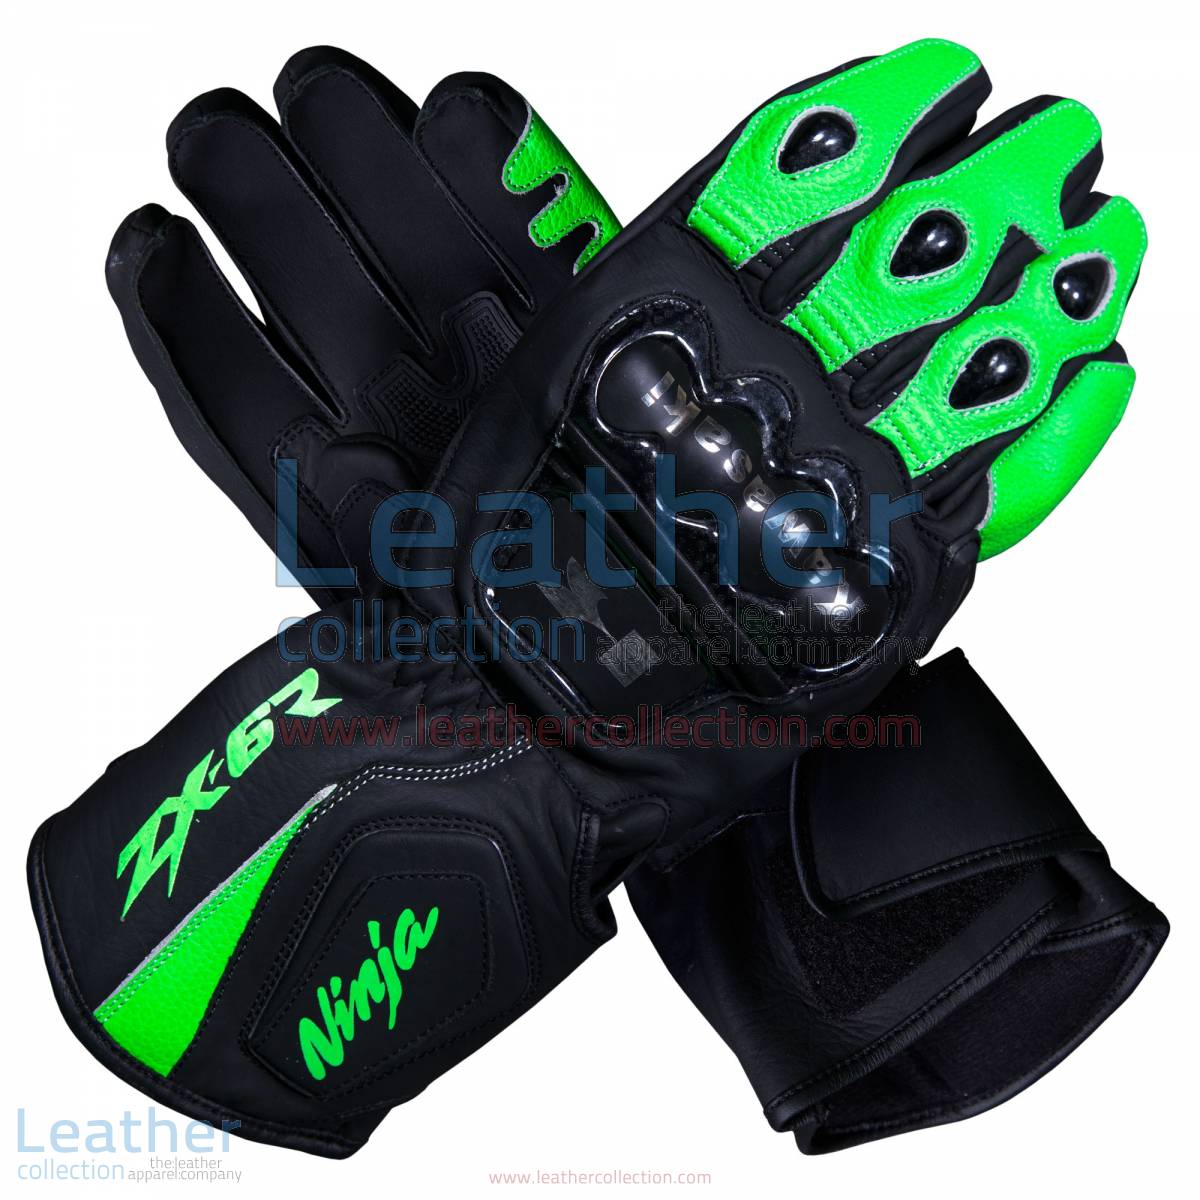 Kawasaki Ninja ZX-6R Leather Motorcycle Gloves